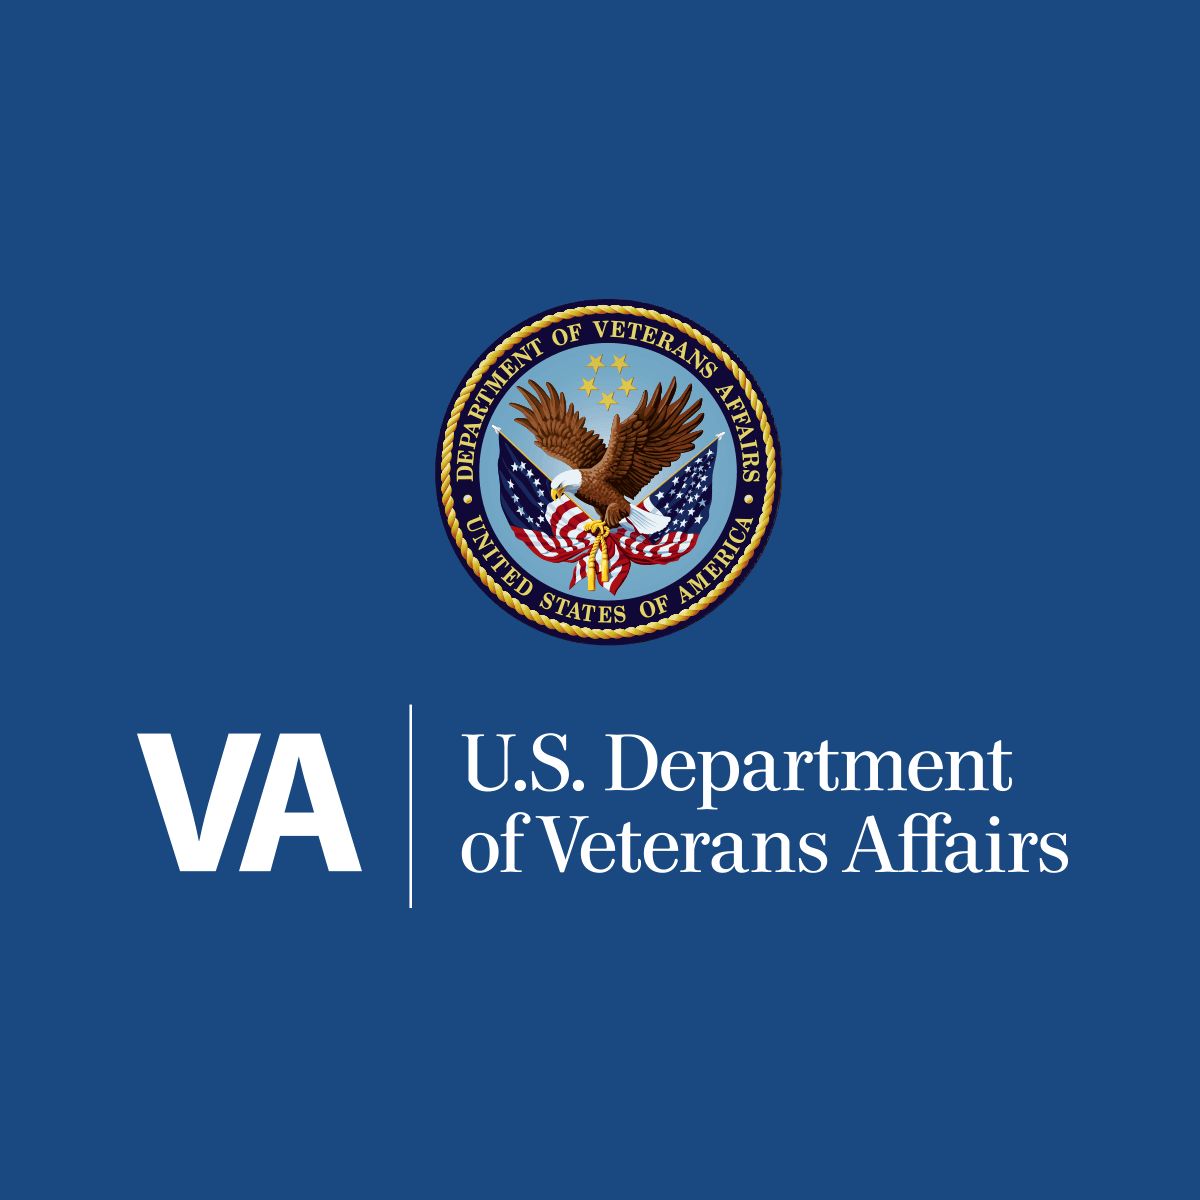 Orlando VA Healthcare System takes care of its veterans